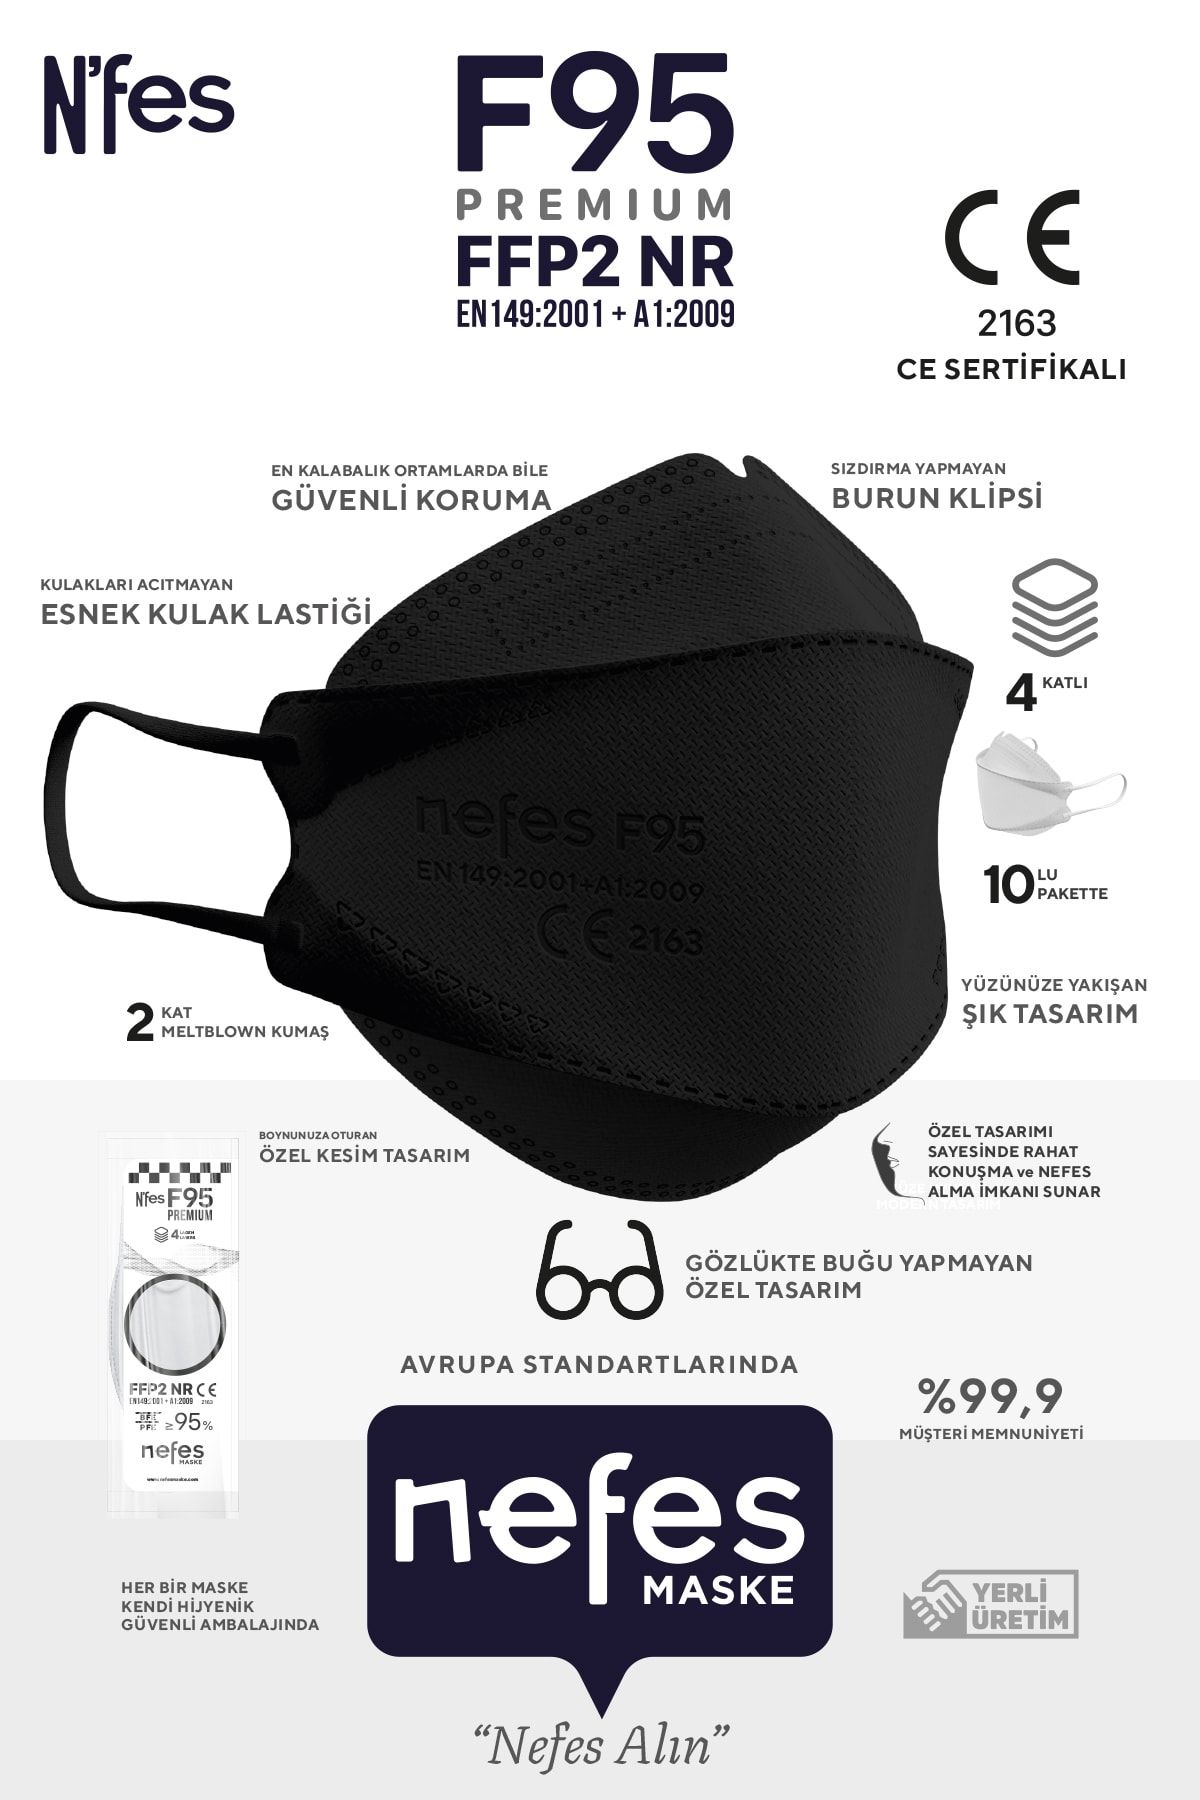 nefes maske F95 Premium Kore Tipi(KF94) Siyah N95 Maske Iso Ve Ce Belgeli 3 Kutu 30 Adet